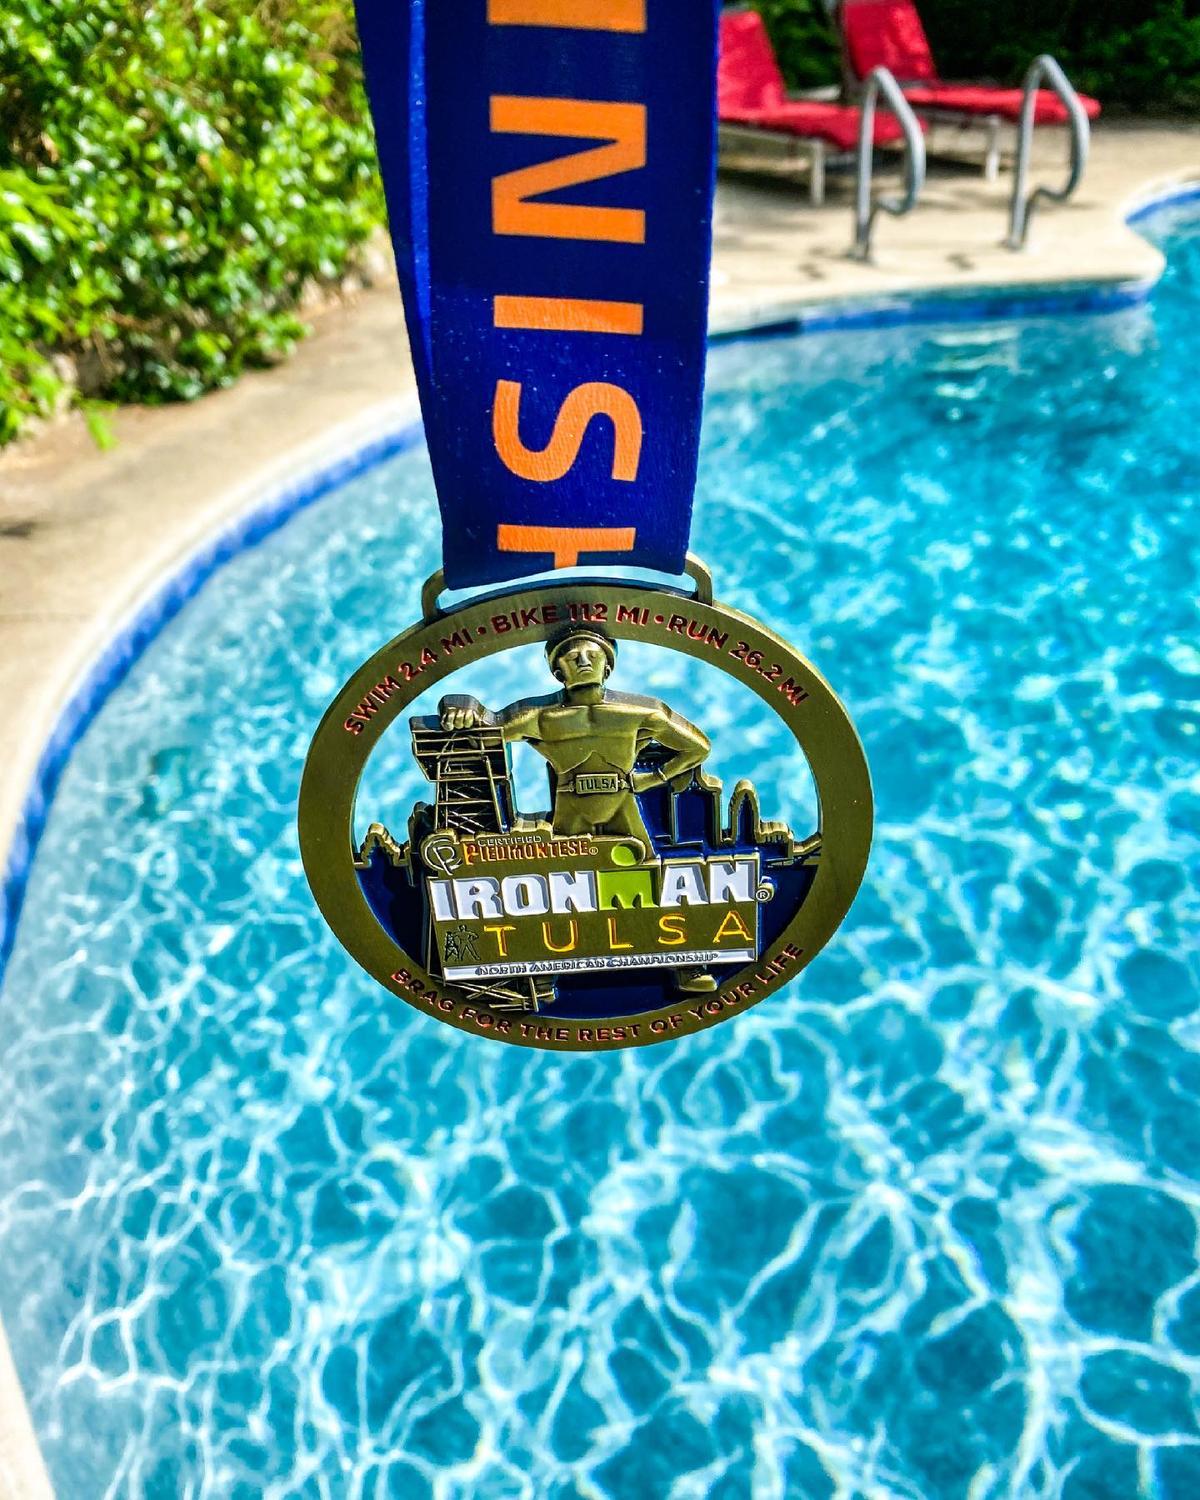 The medal Noel Mulkey received at the 2021 Tulsa Ironman Triathlon. (Courtesy of <a href="https://www.instagram.com/noelmulkey/">Noel Mulkey</a>)